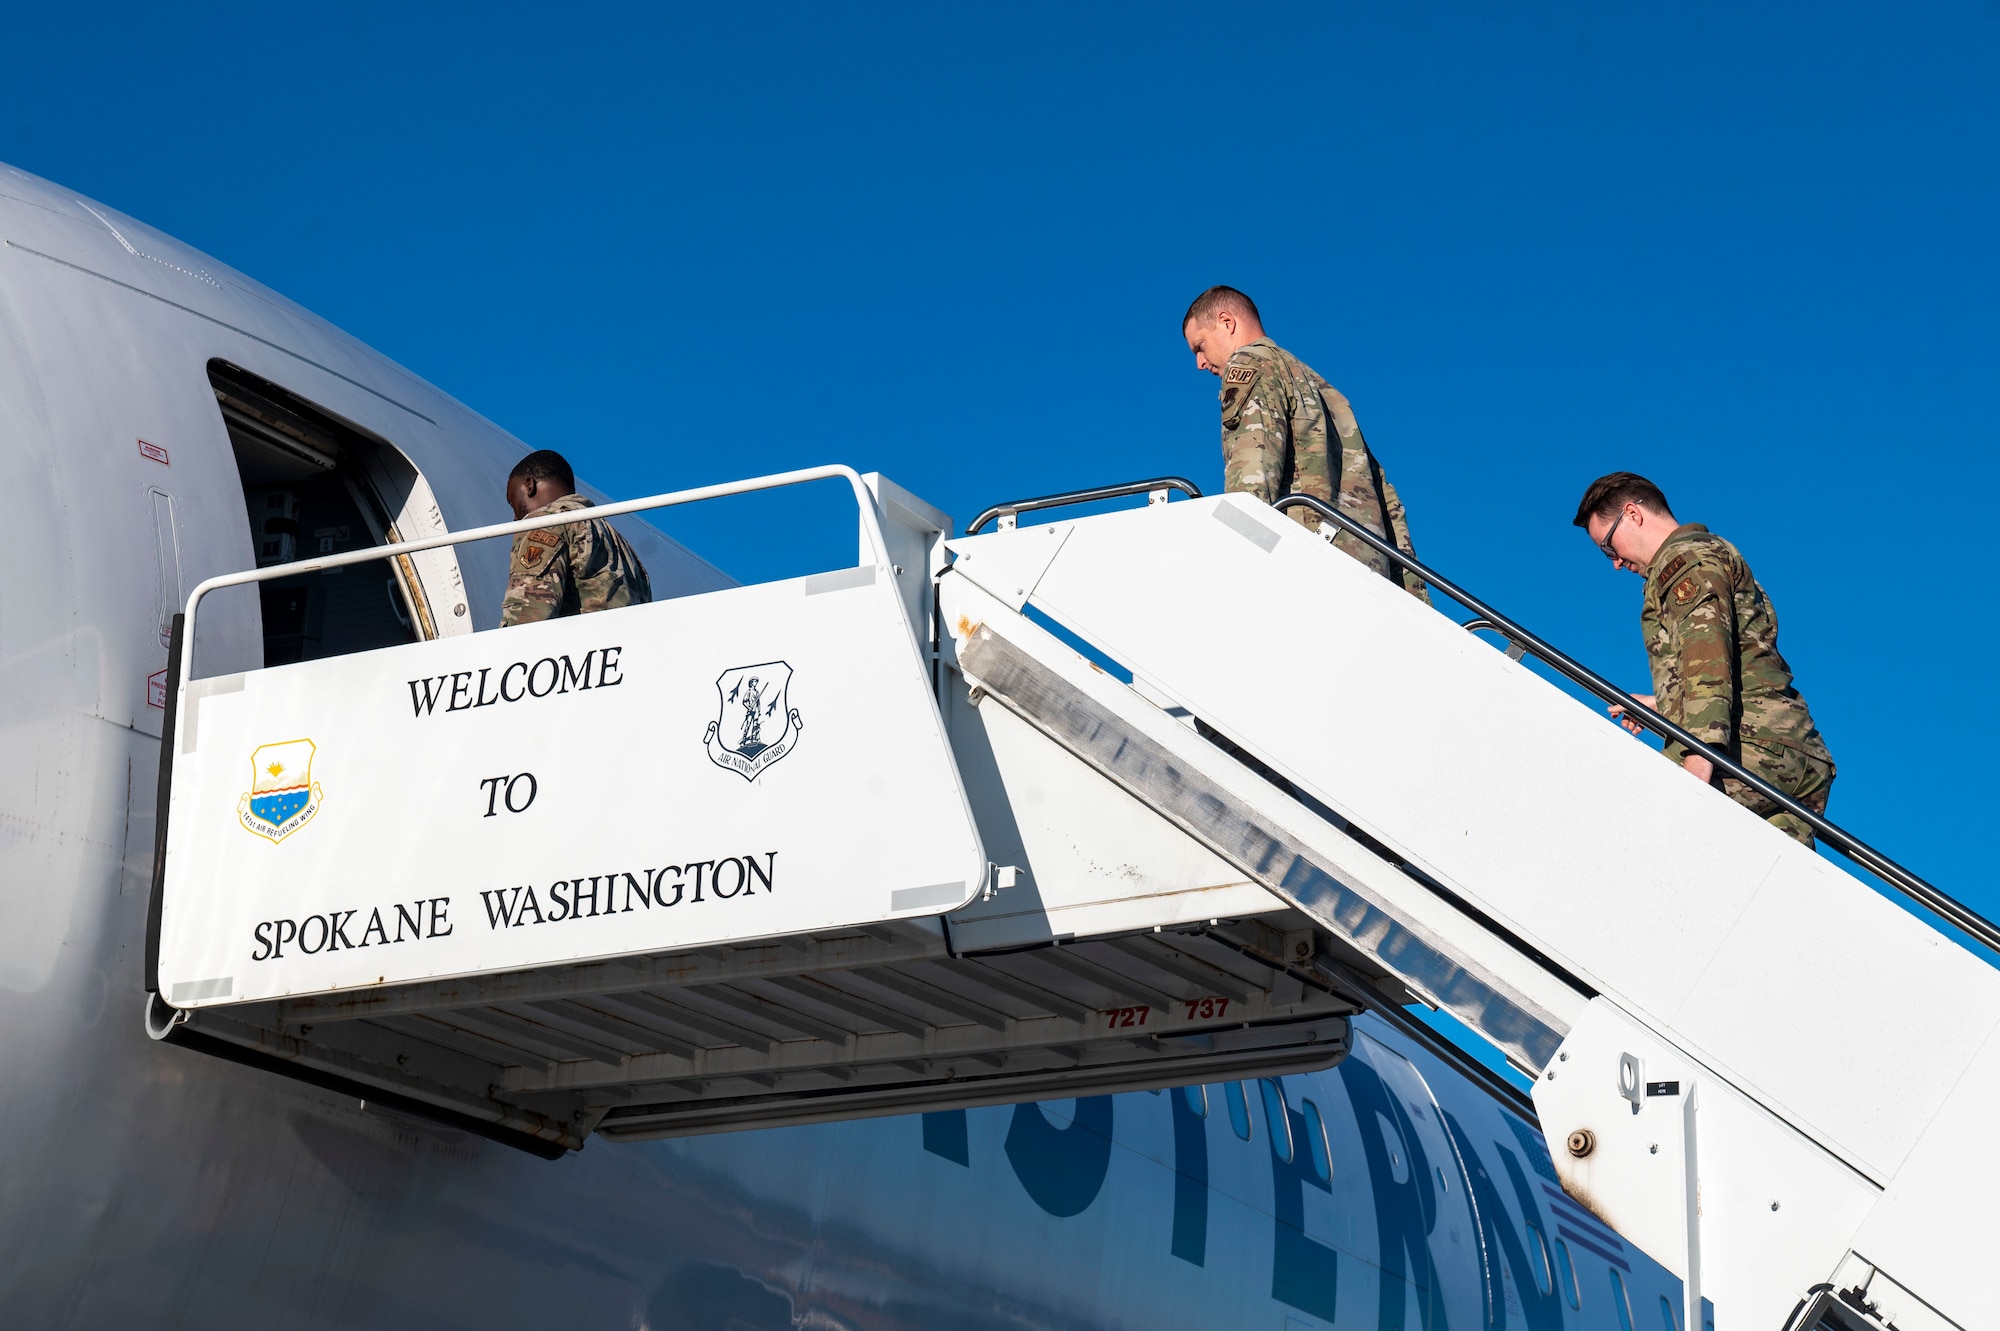 Airmen walk on air stairs to board a plane.